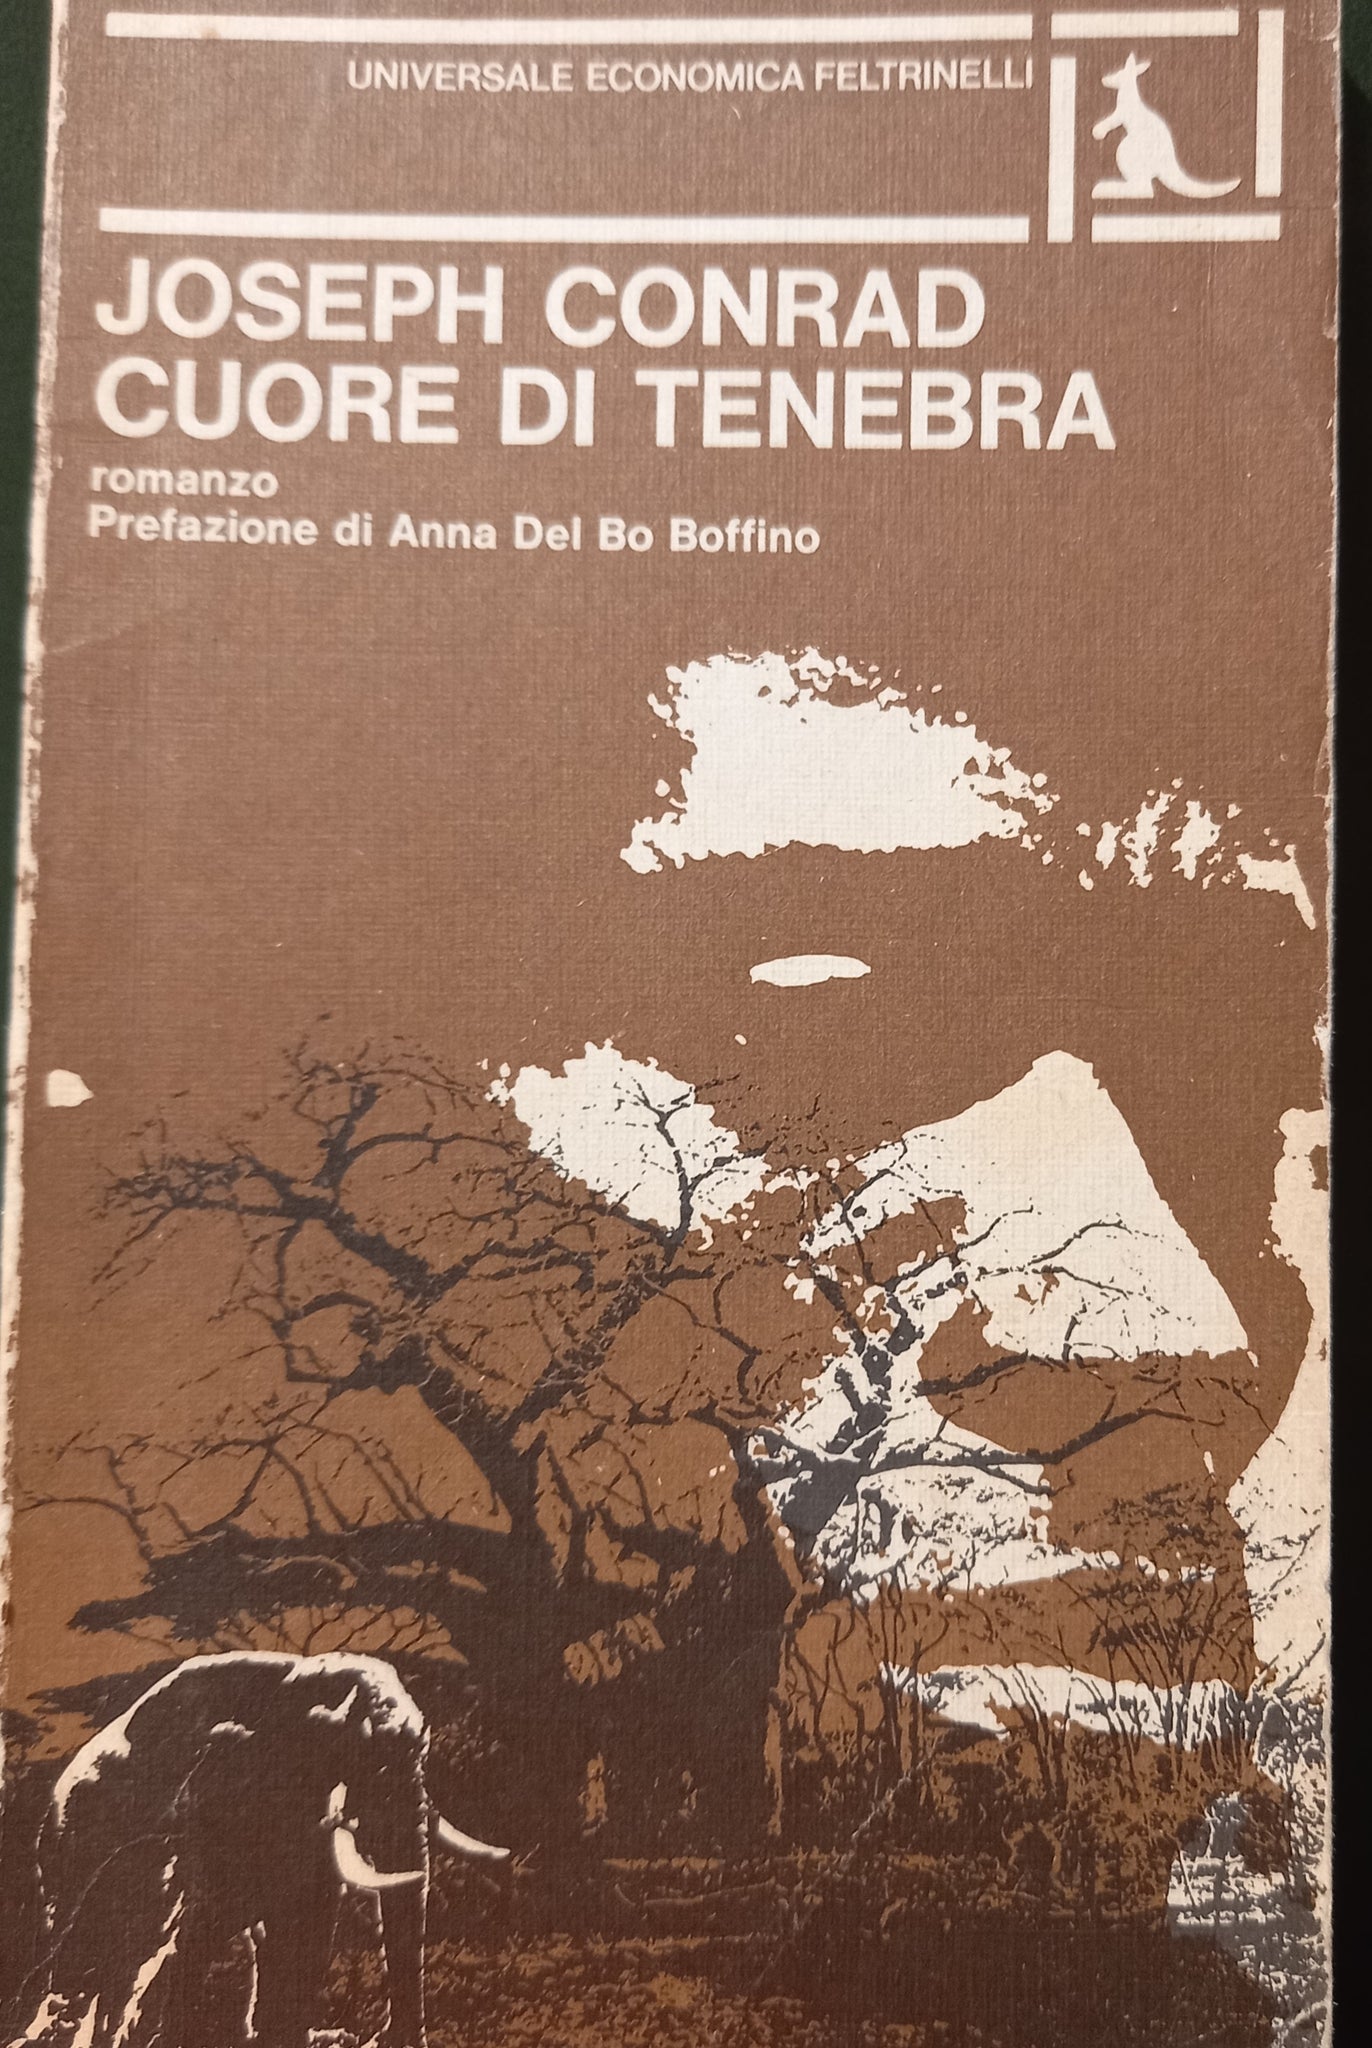 Heart of darkness - Cuore di tenebra – Long Song Books